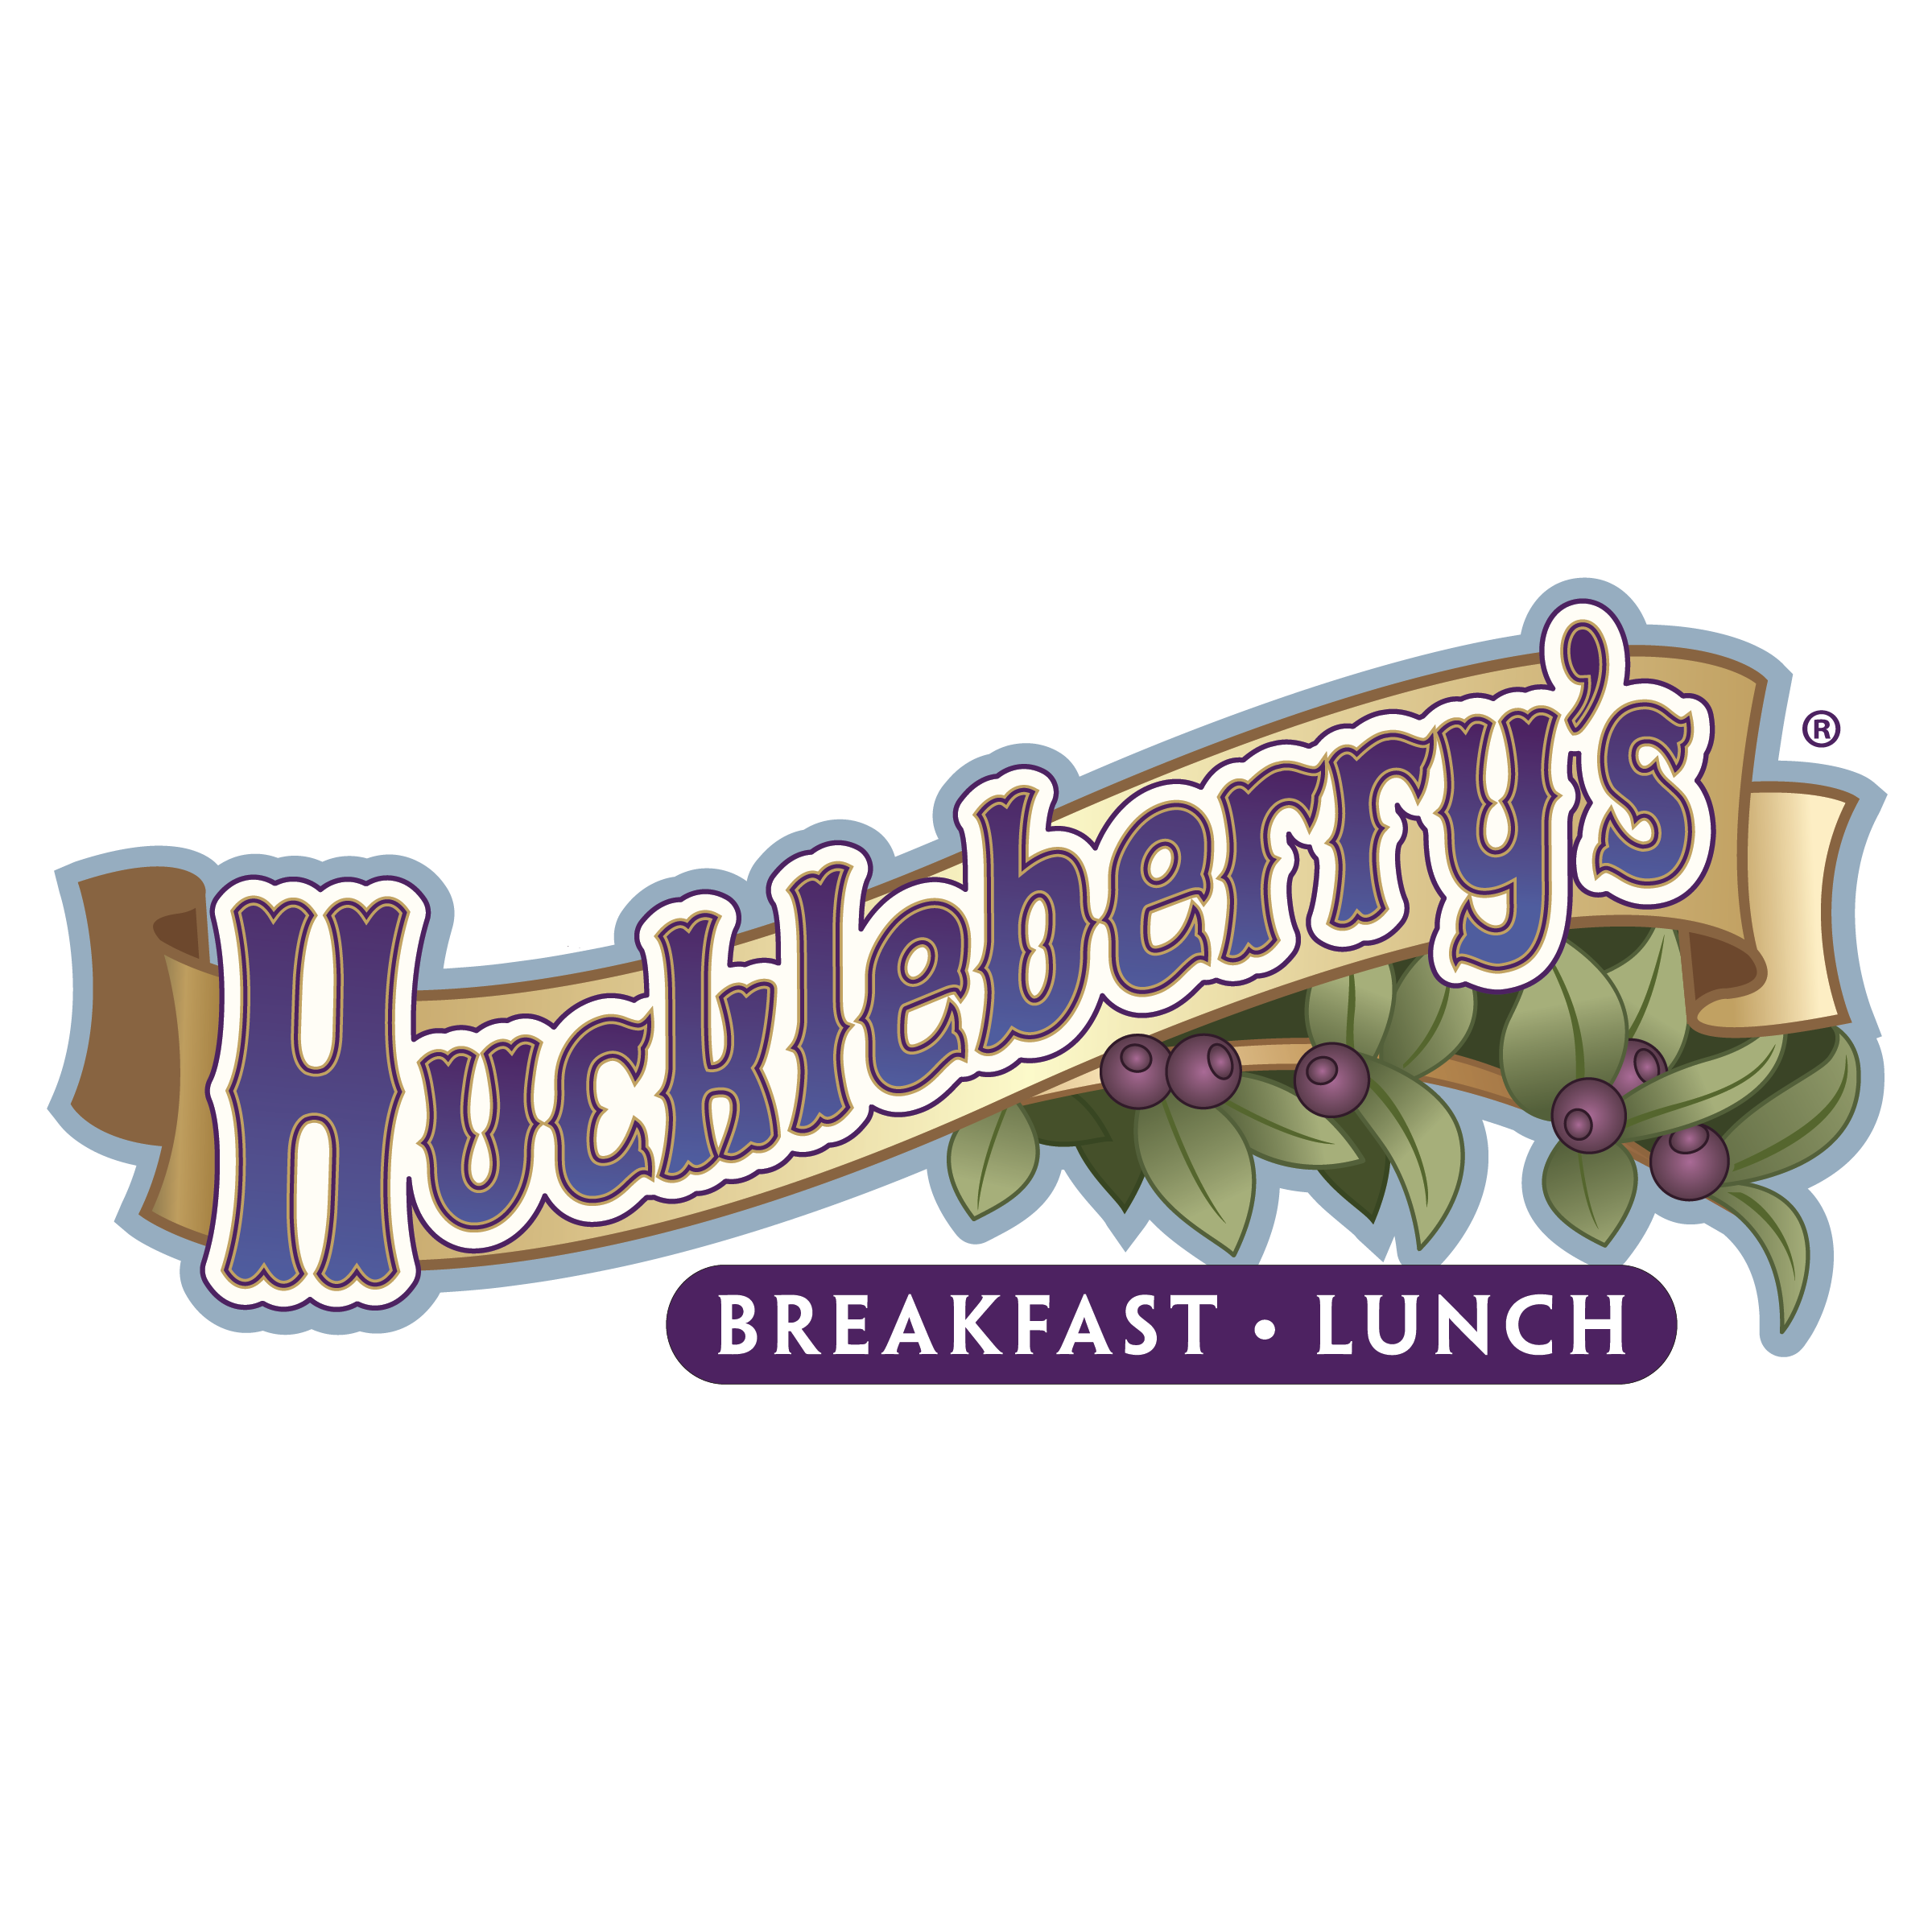 Huckleberry's logo